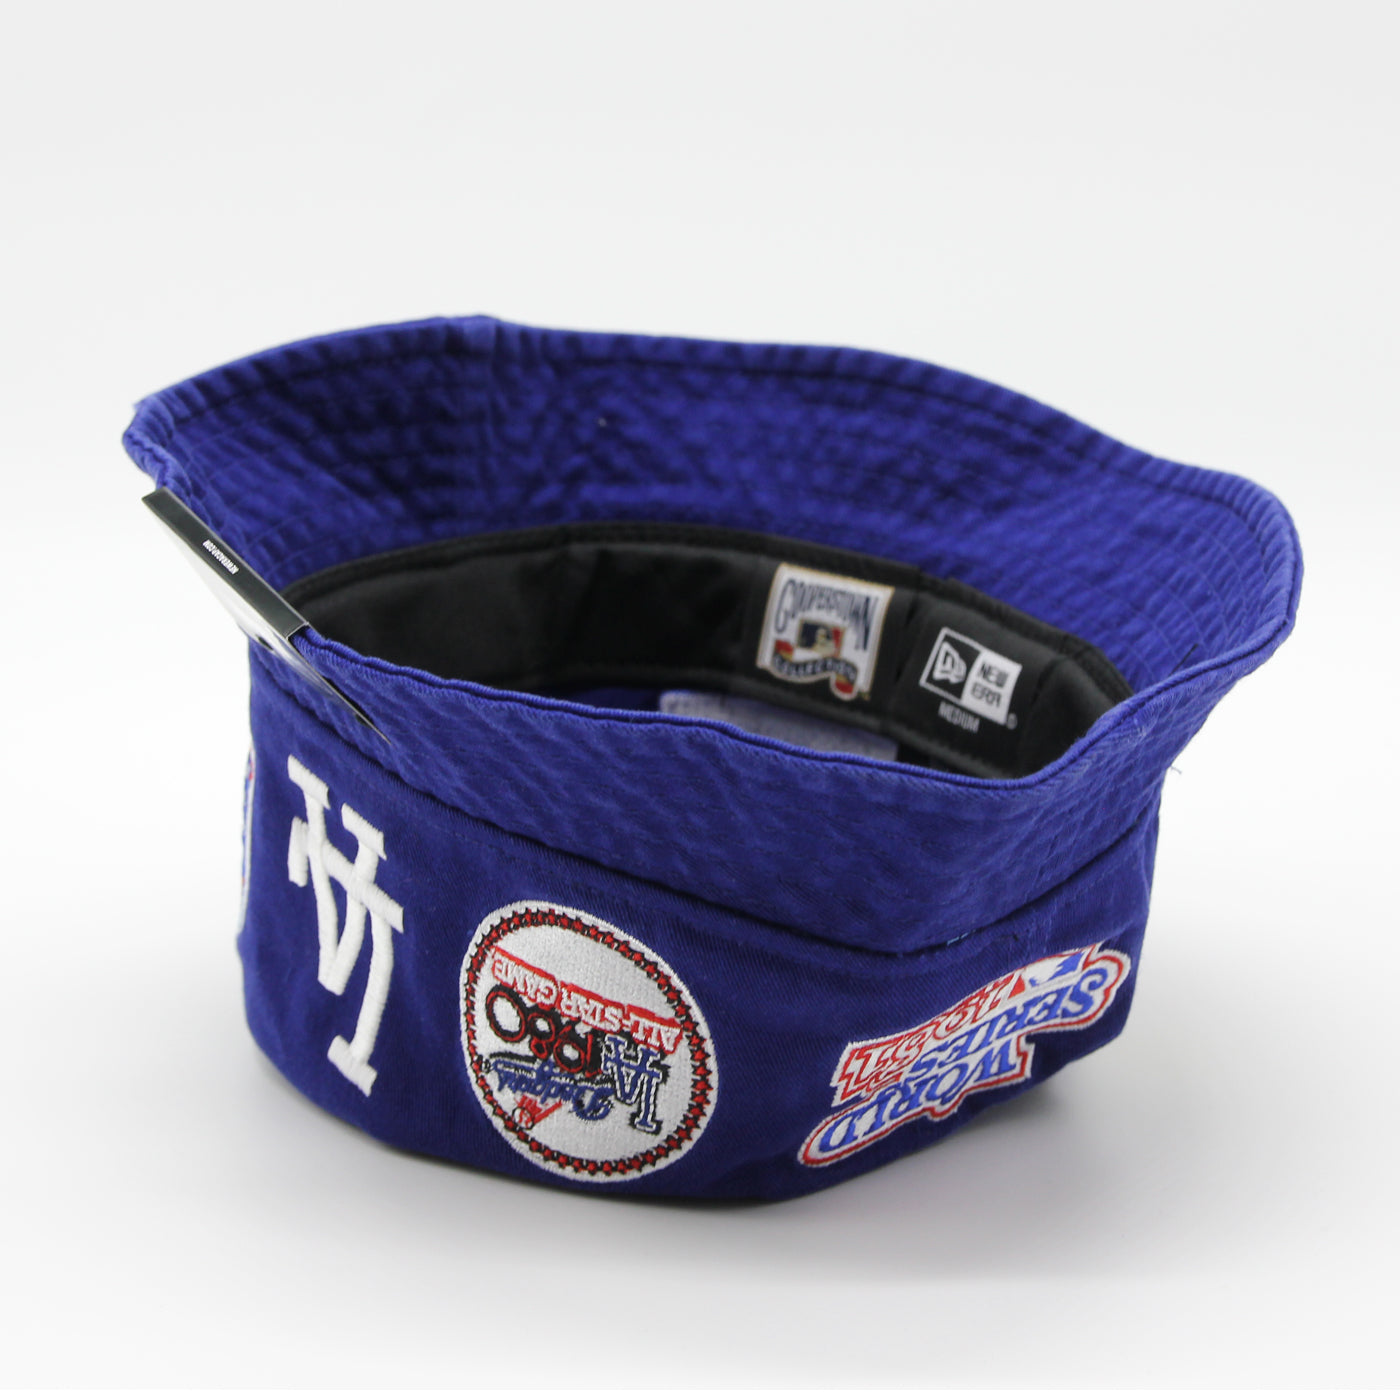 New Era Cooperstown Multi Patch Blue Bucket Hat LA Dodgers blue - Shop-Tetuan